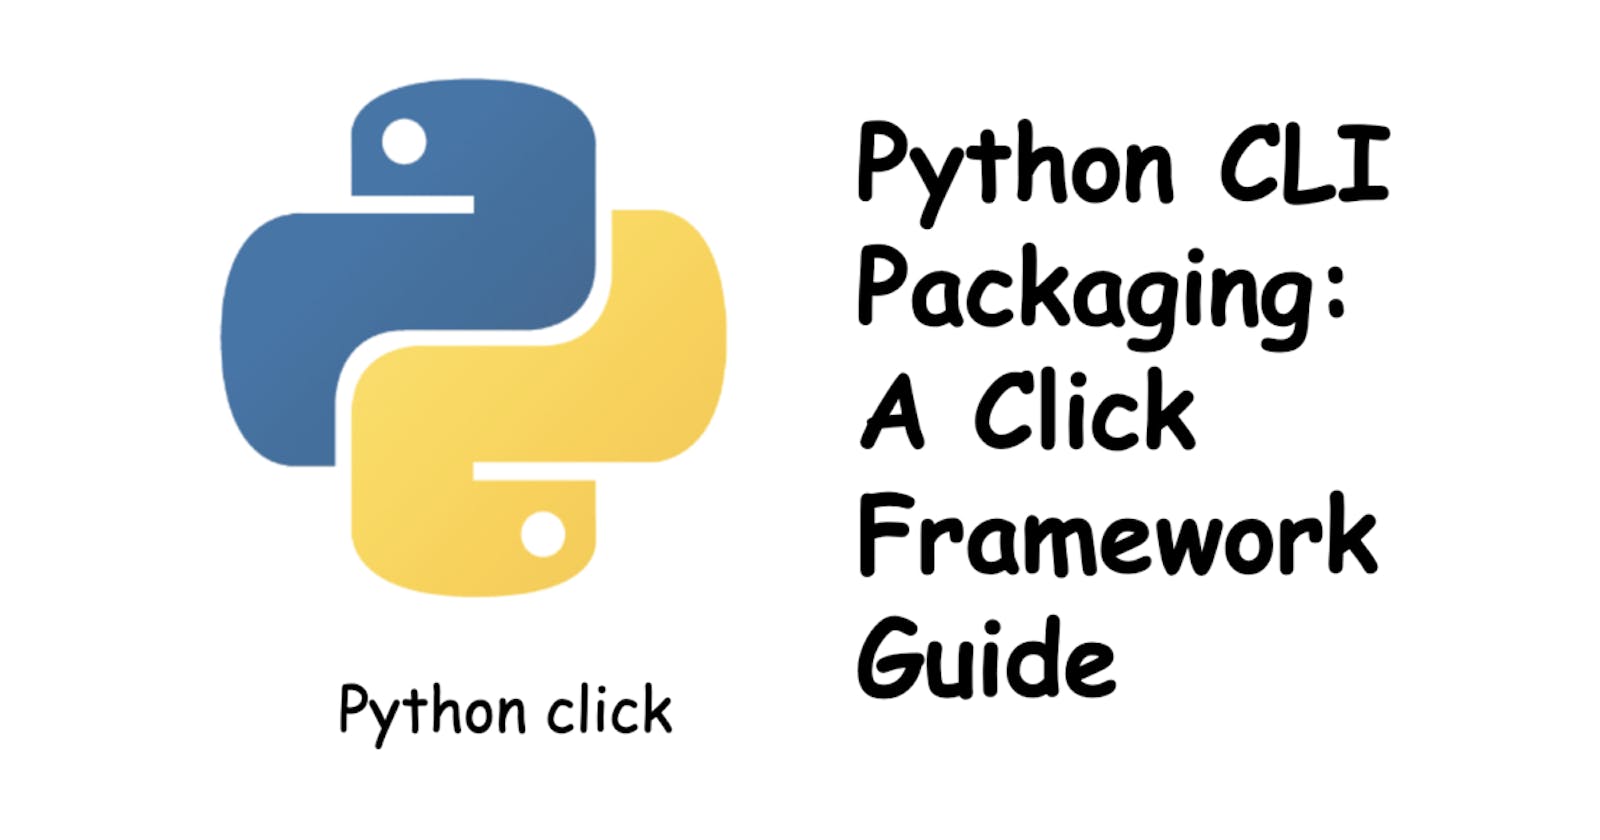 Python CLI Packaging: A Click Framework Guide